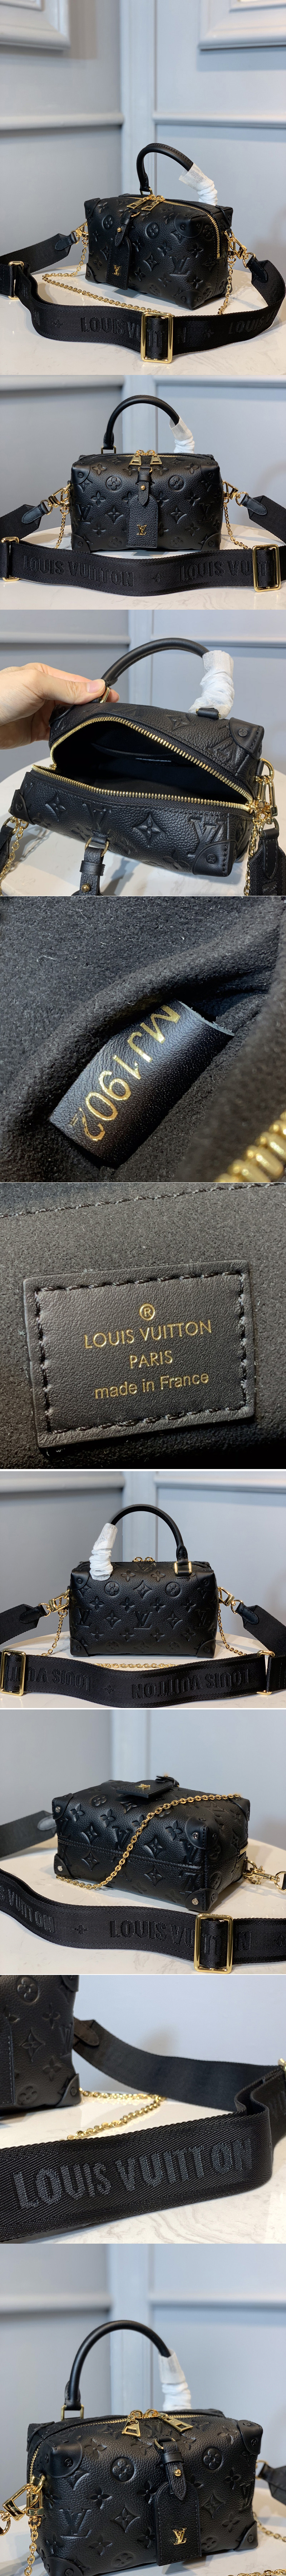 Louis Vuitton M56319 LV HandBag in Black Monogram Empreinte Leather Replica  sale online ,buy fake bag